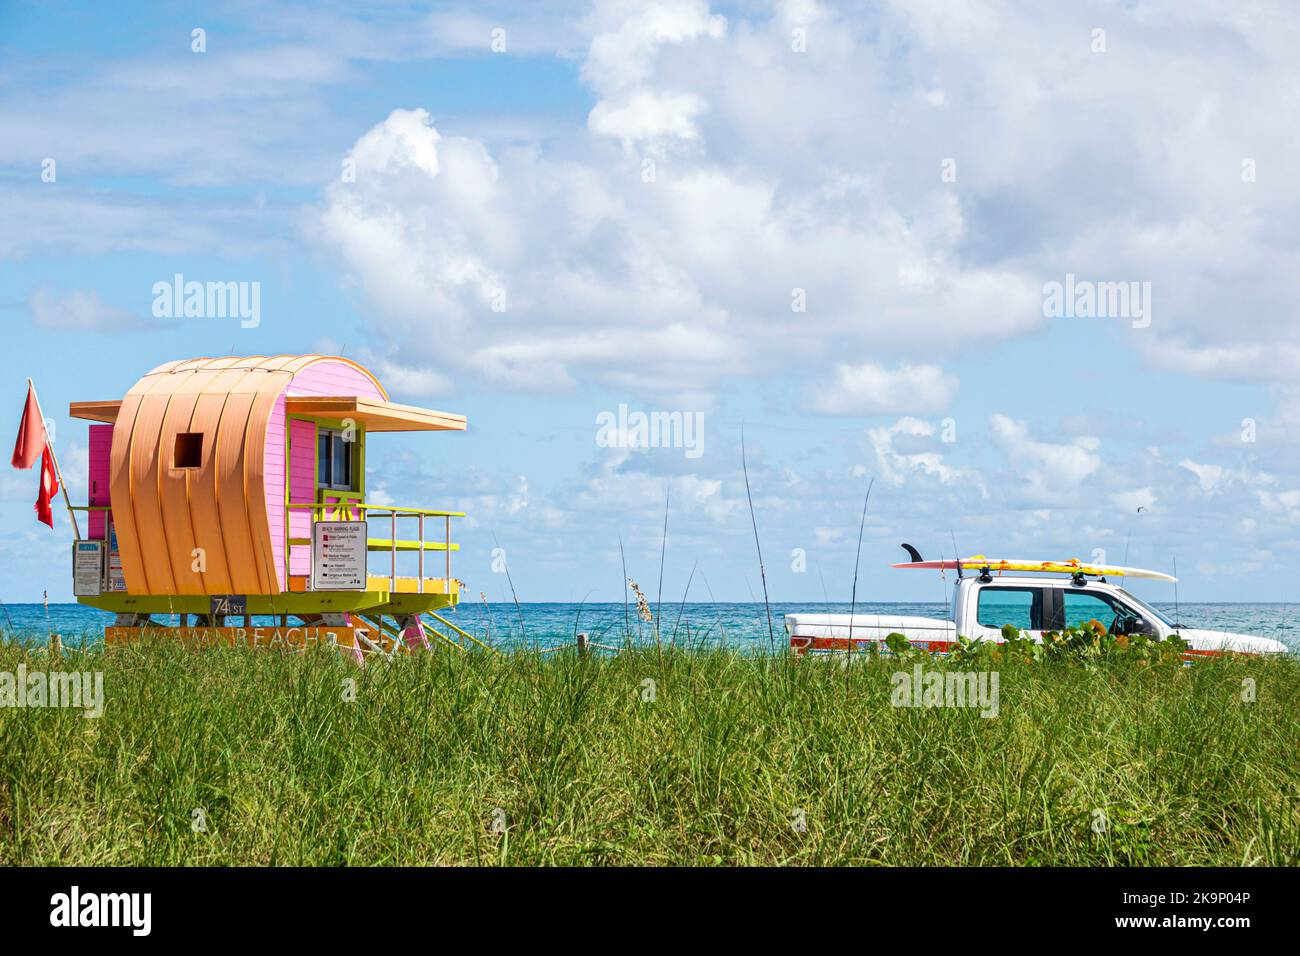 Miami Beach Florida, North Beach Ocean Terrace Rettungsschwimmer Station Tower Beach Patrouille geparkter Pickup-Truck Surfbrett, Atlantischer Ozean Düne Gras blauer Himmel cl Stockfoto